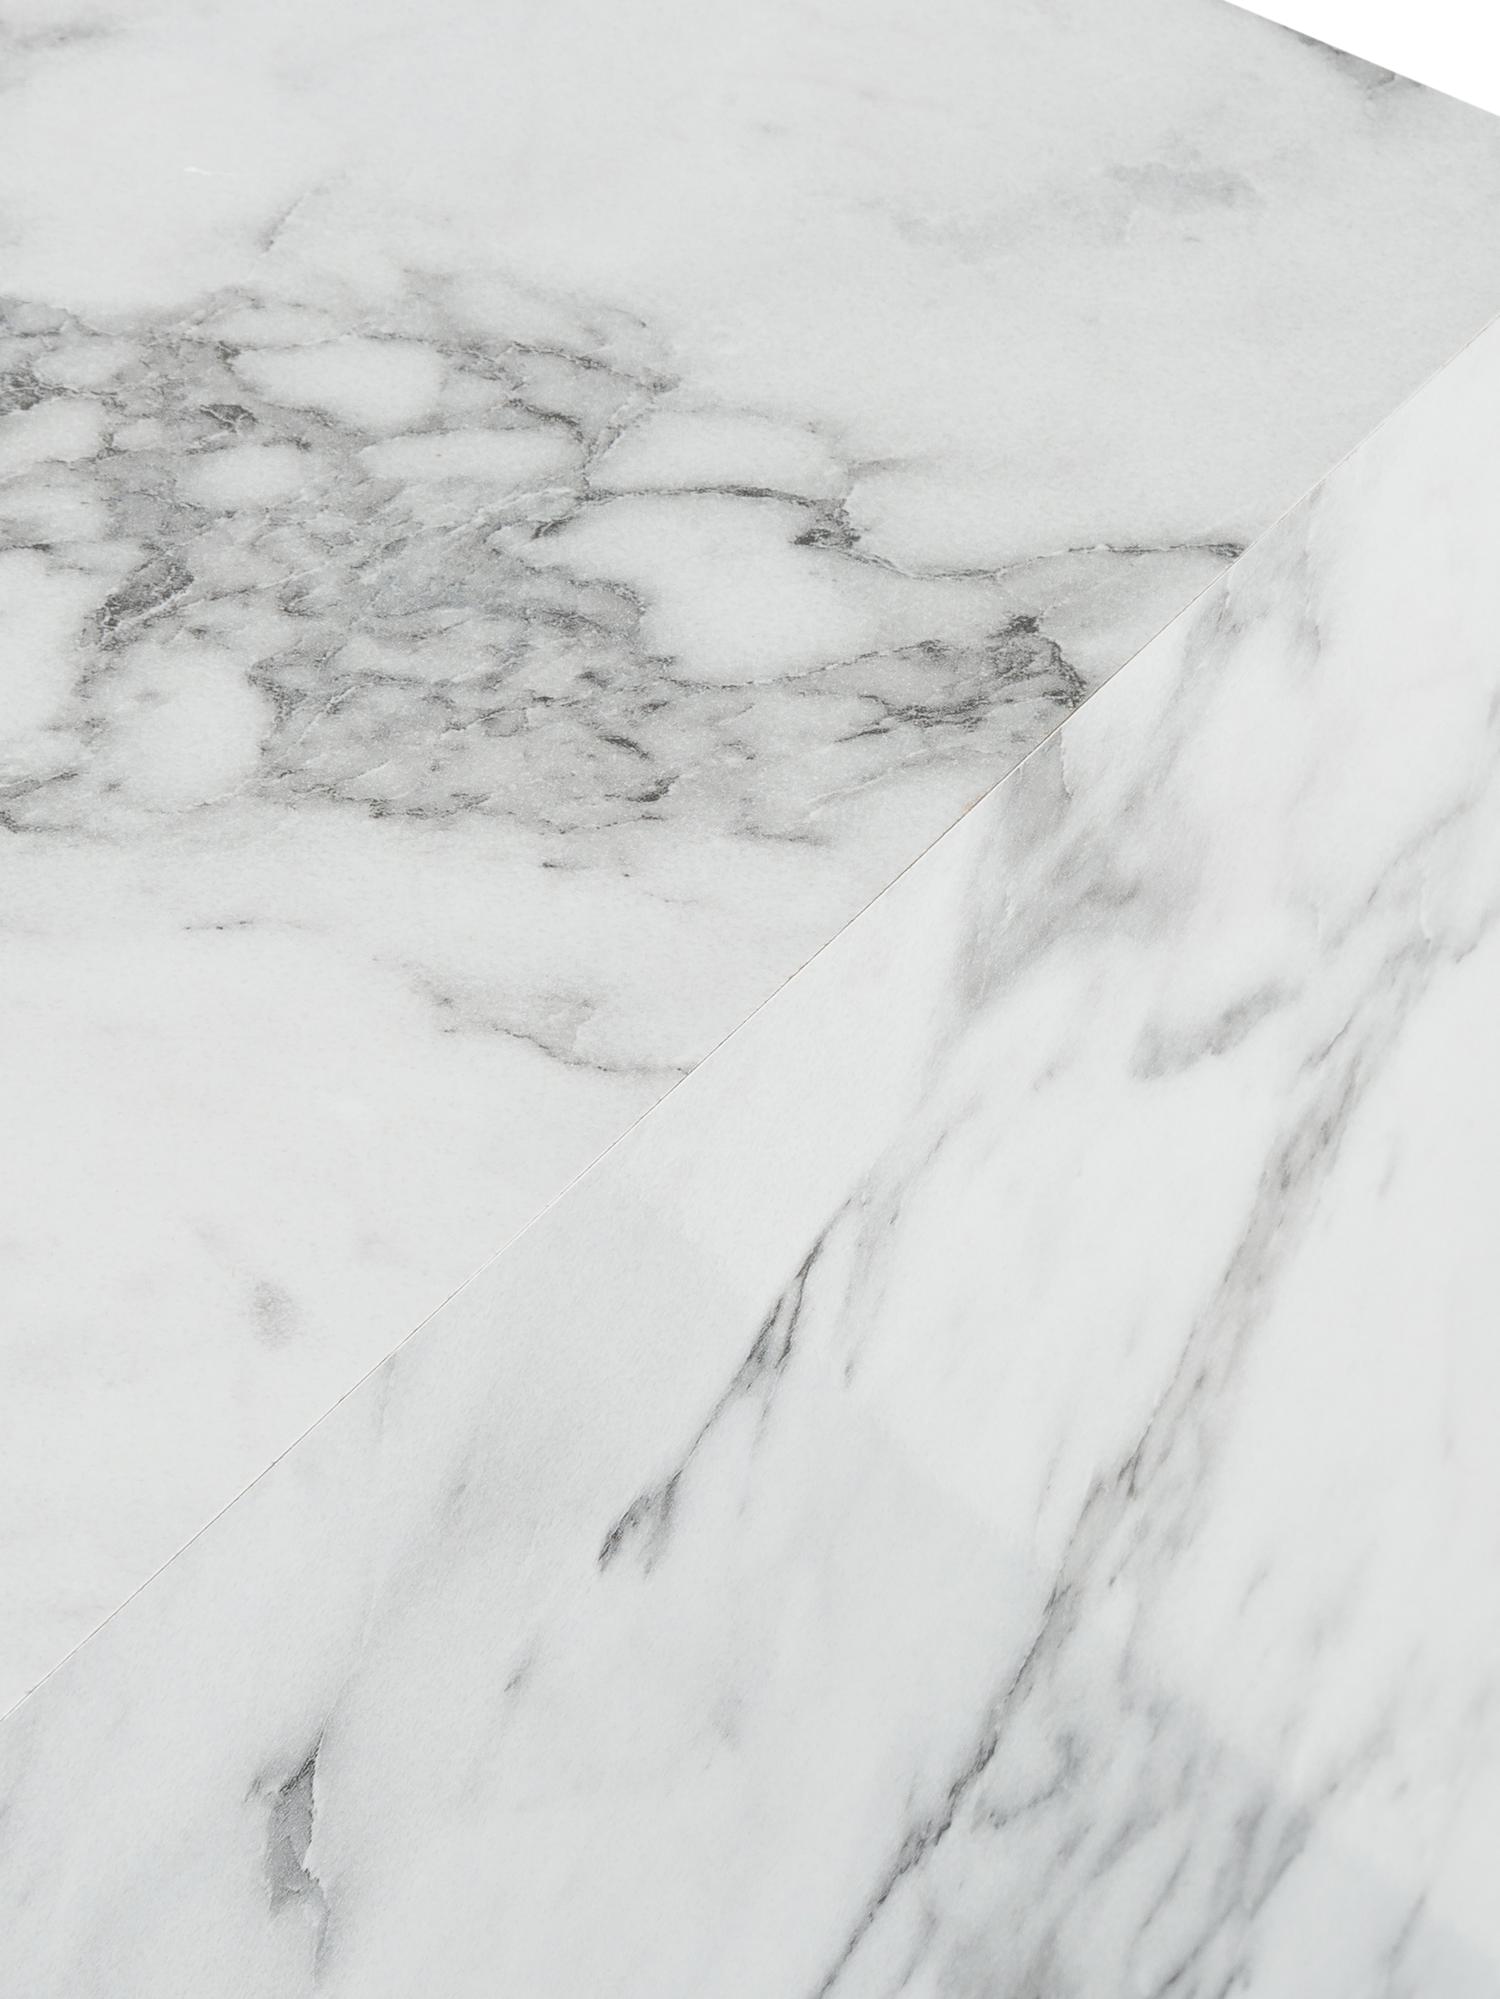 Hos SteelandMarble.dk finder du eksklusive marmorbord i høj kvalitet.